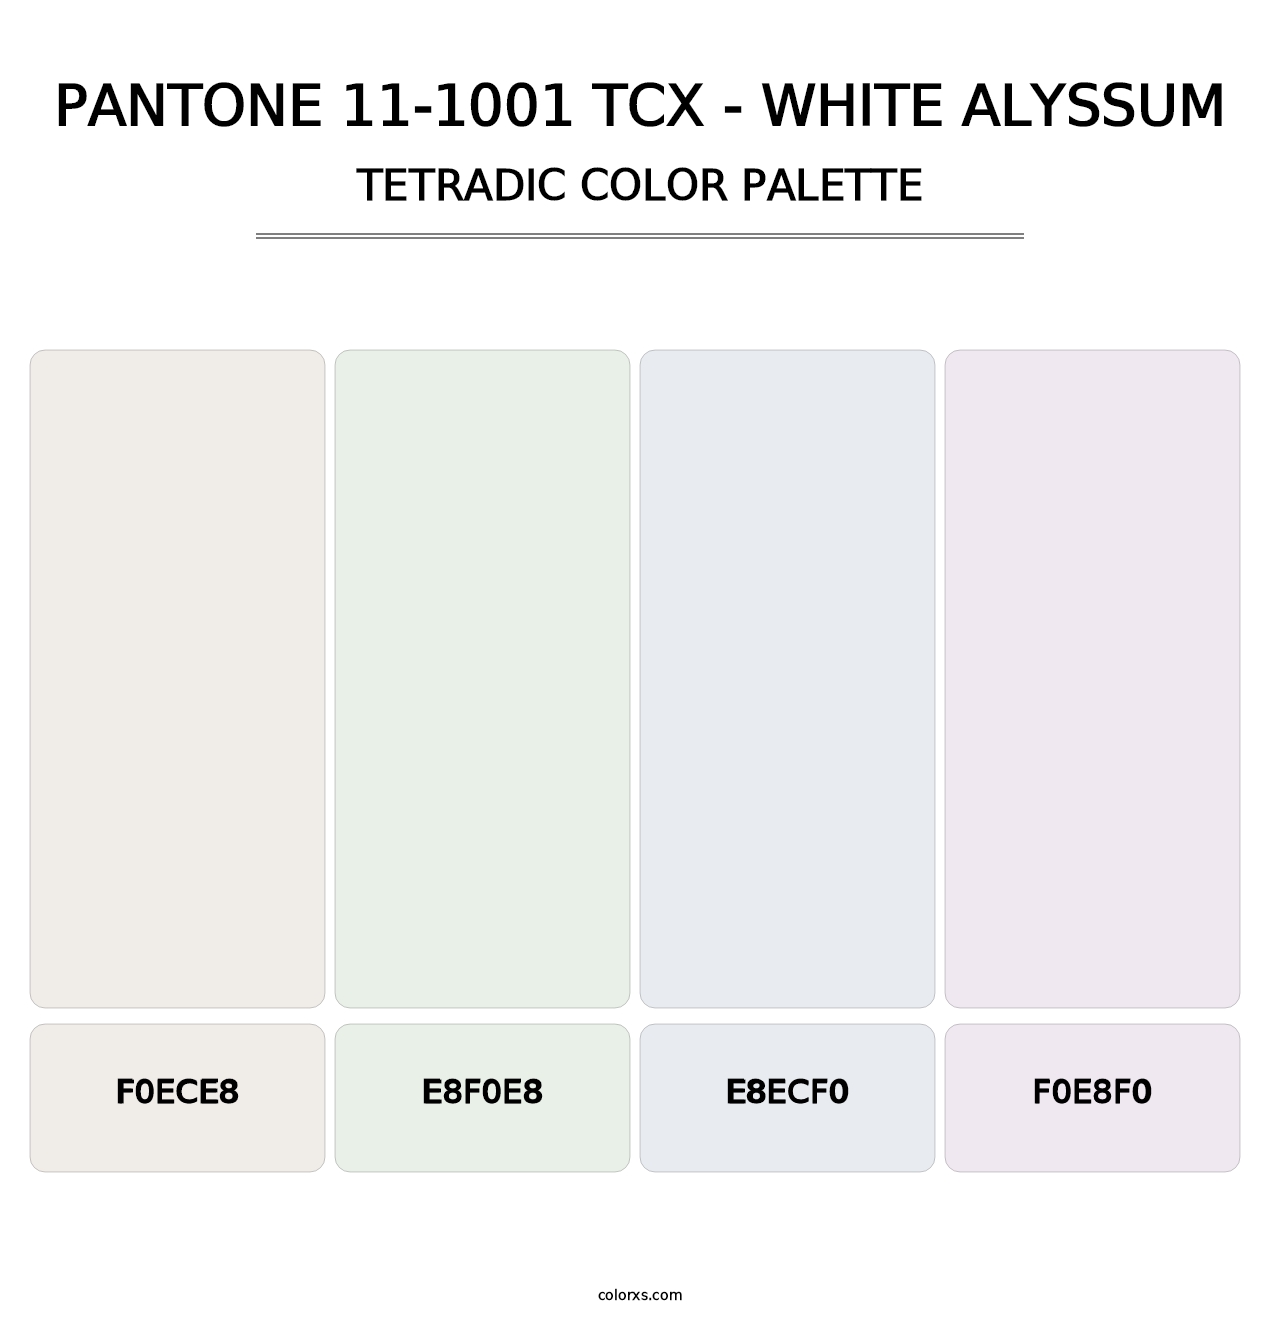 PANTONE 11-1001 TCX - White Alyssum - Tetradic Color Palette